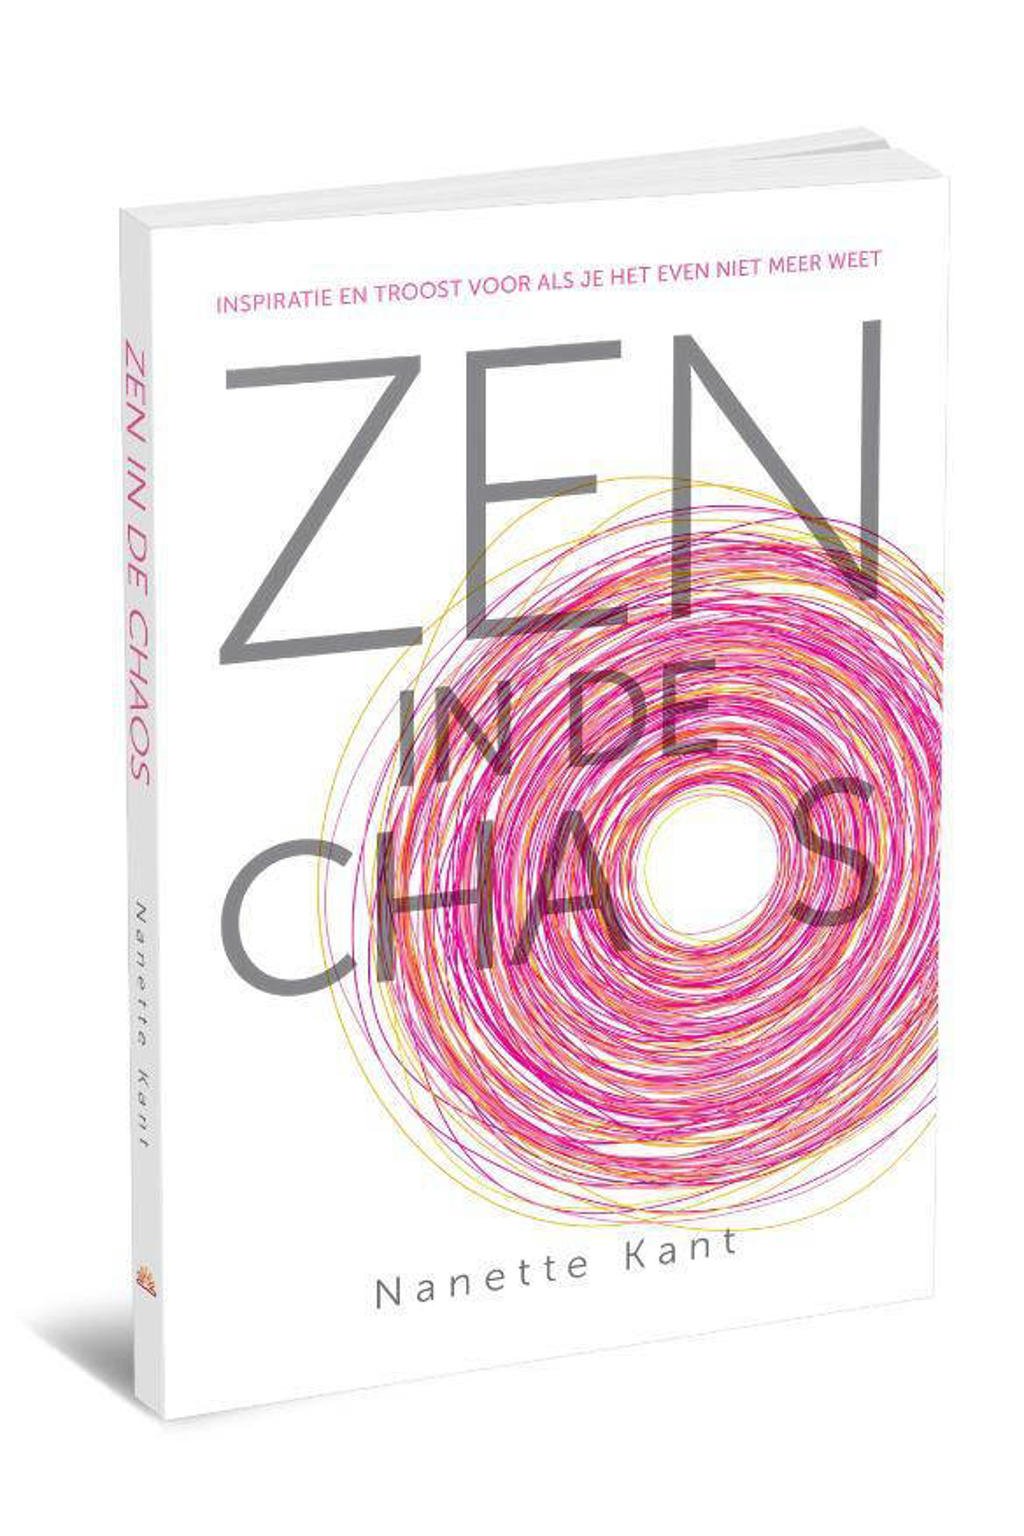 Zen in de chaos - Nanette Kant